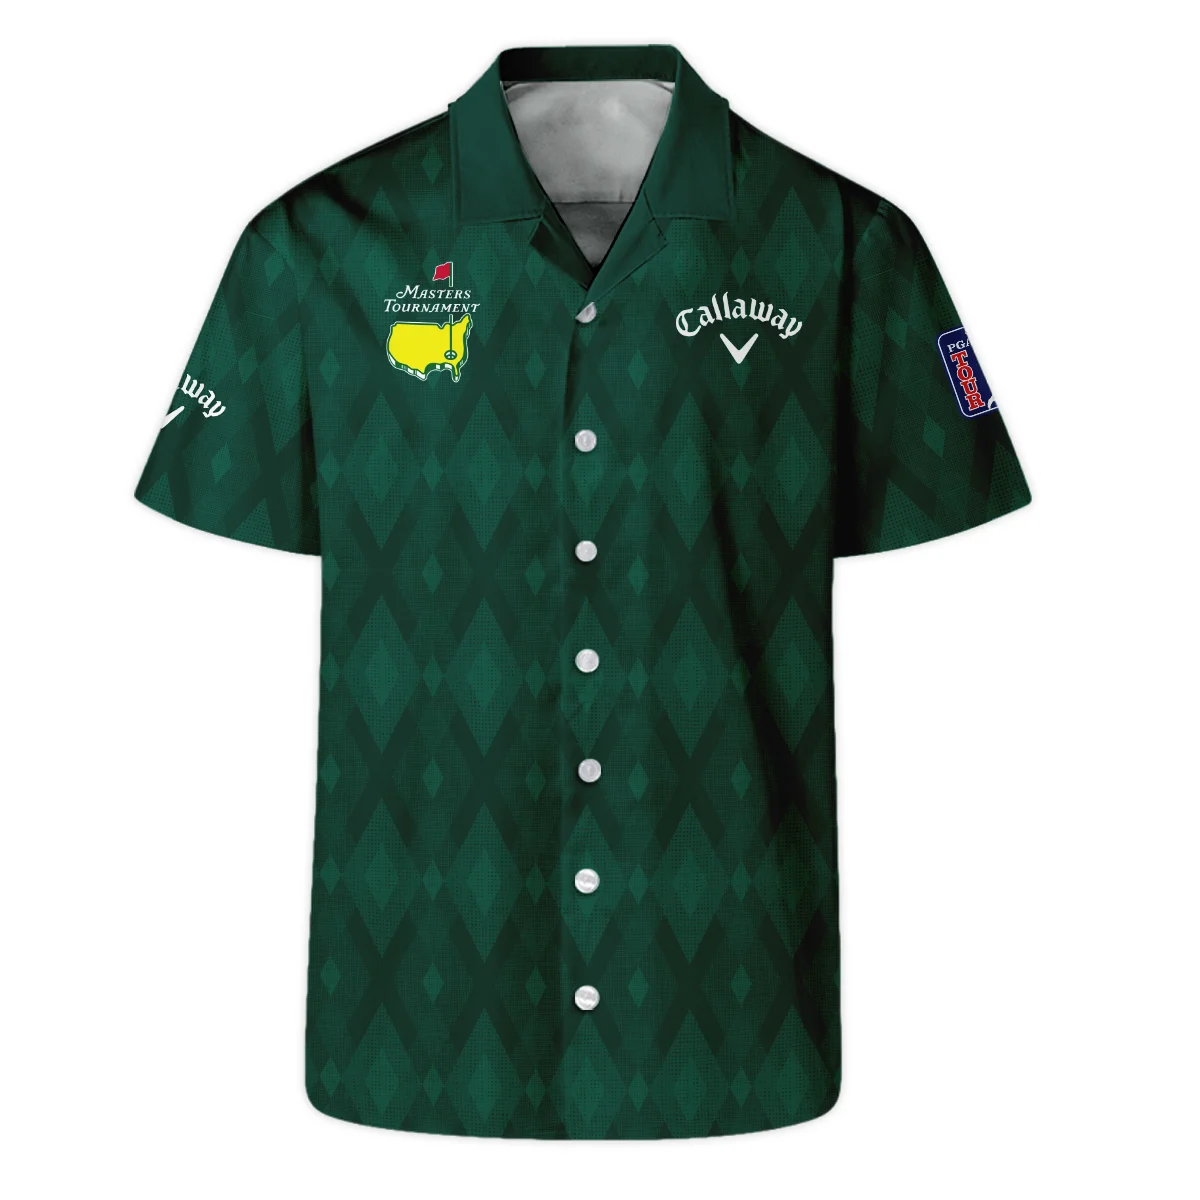 Green Fabric Ikat Diamond pattern Masters Tournament Callaway Unisex Sweatshirt Style Classic Sweatshirt